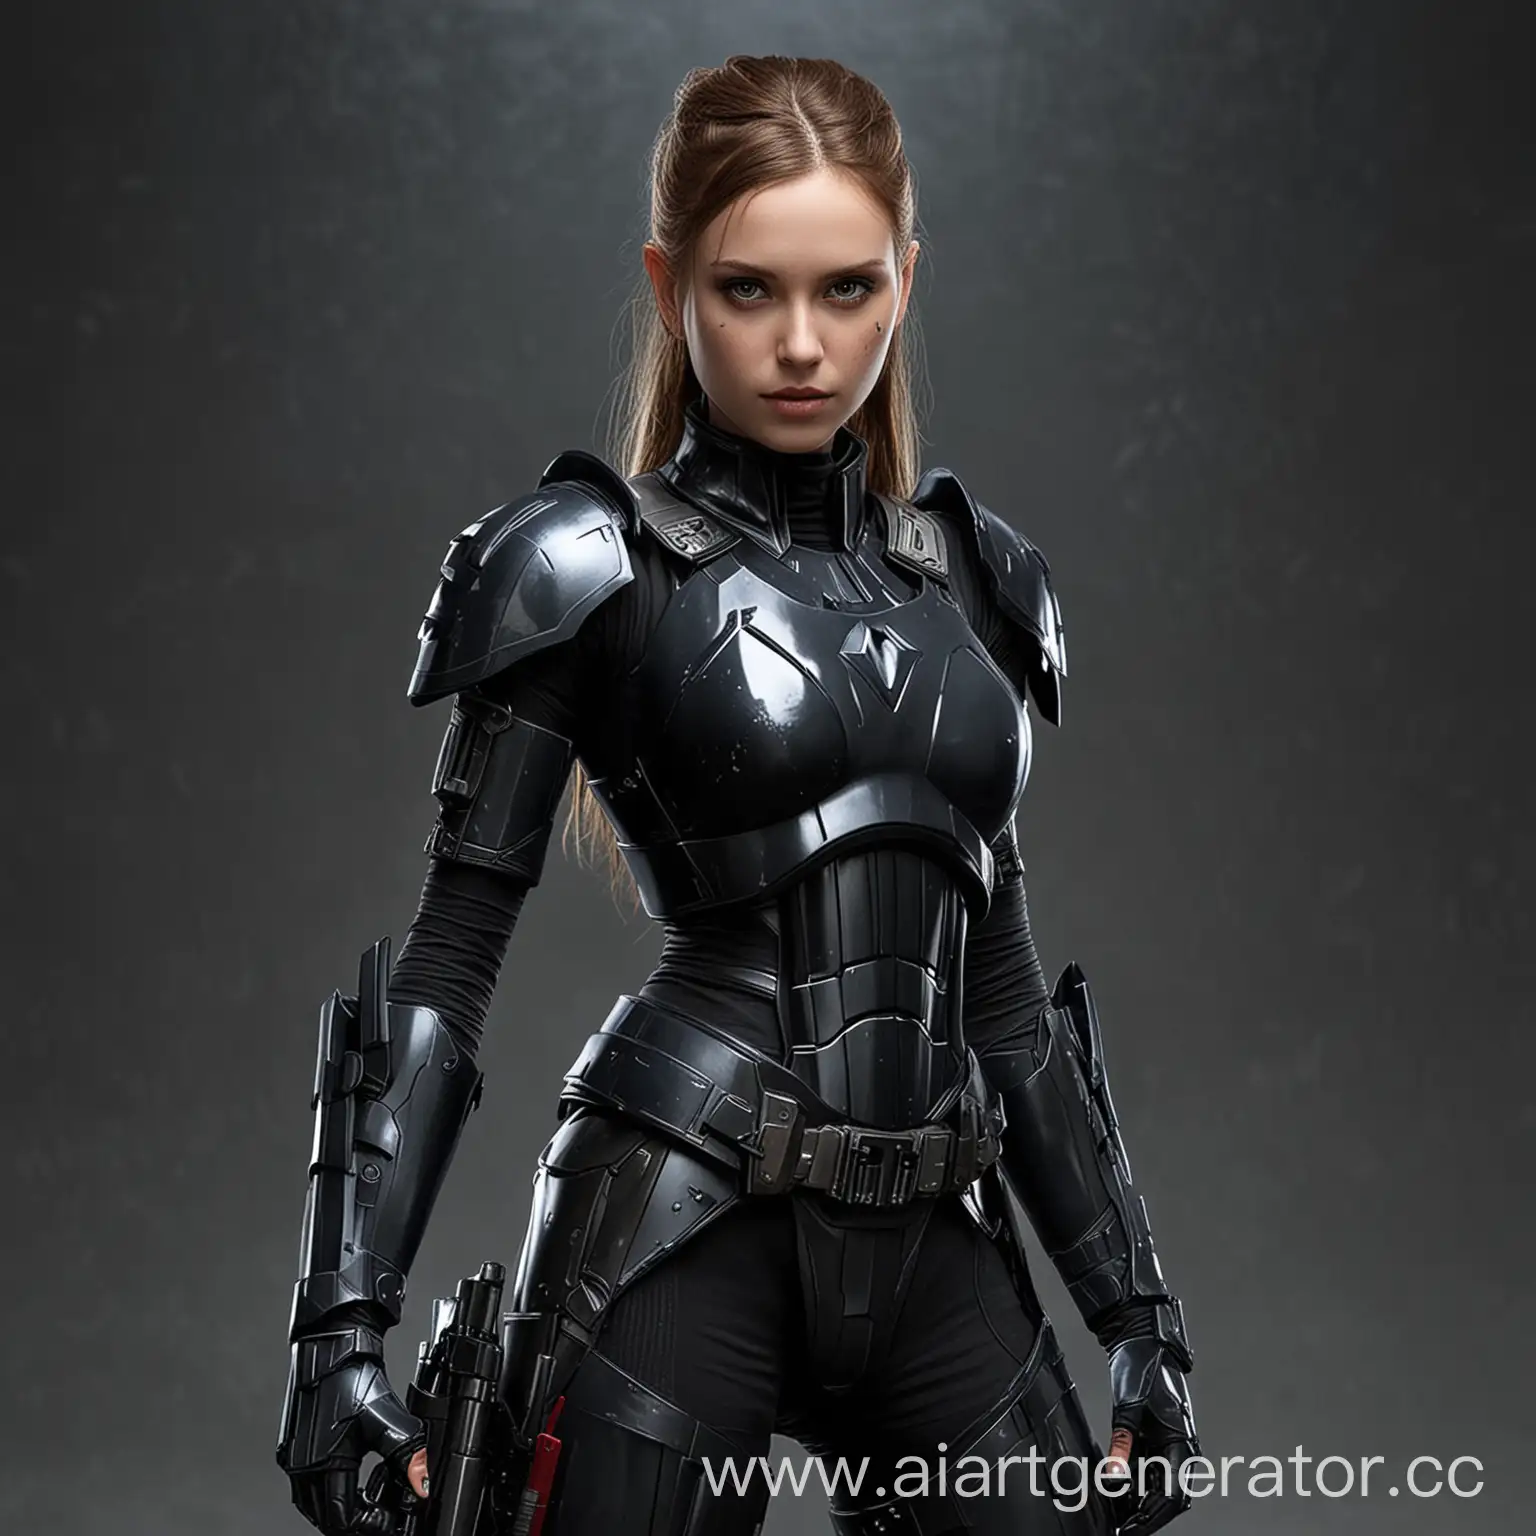 Star Wars clone girl in dark armor